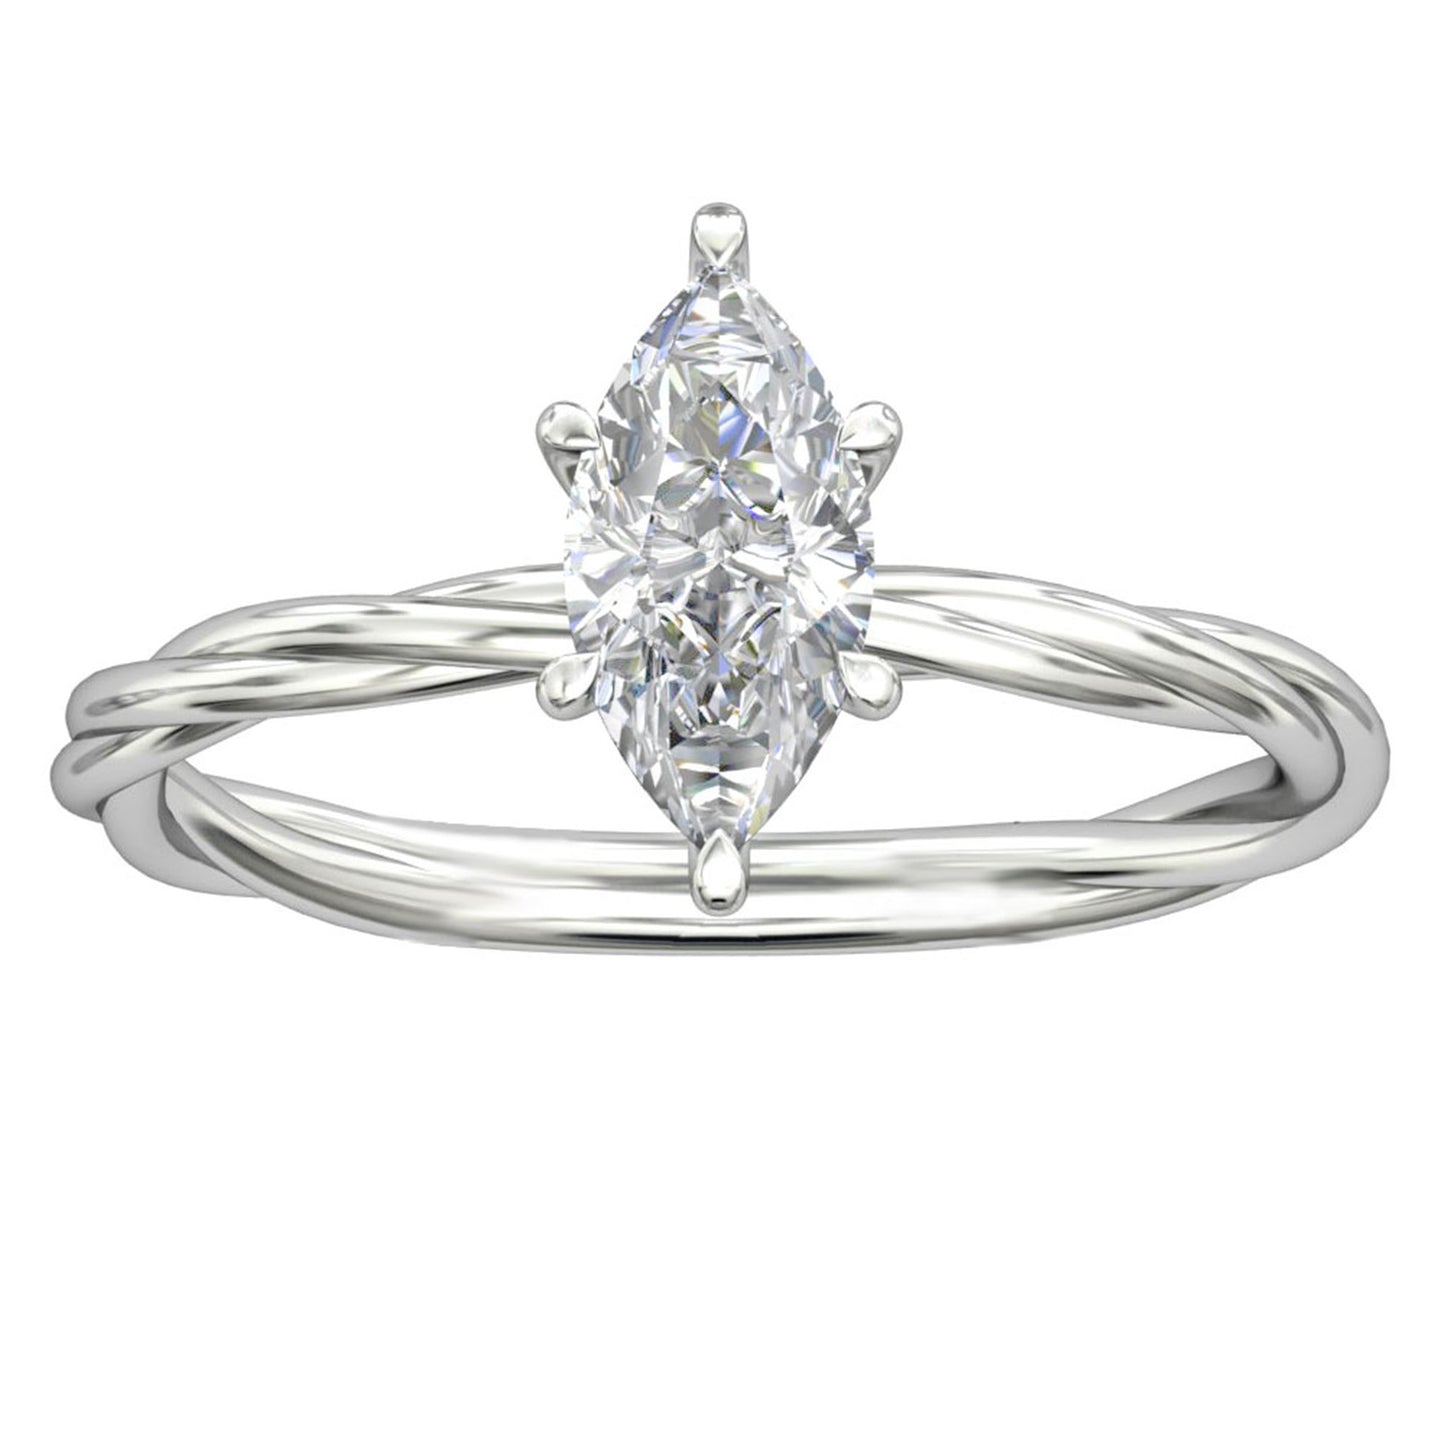 Rope Shank Design Wedding Ring, 1.0CT Marquise Cut Moissanite Ring